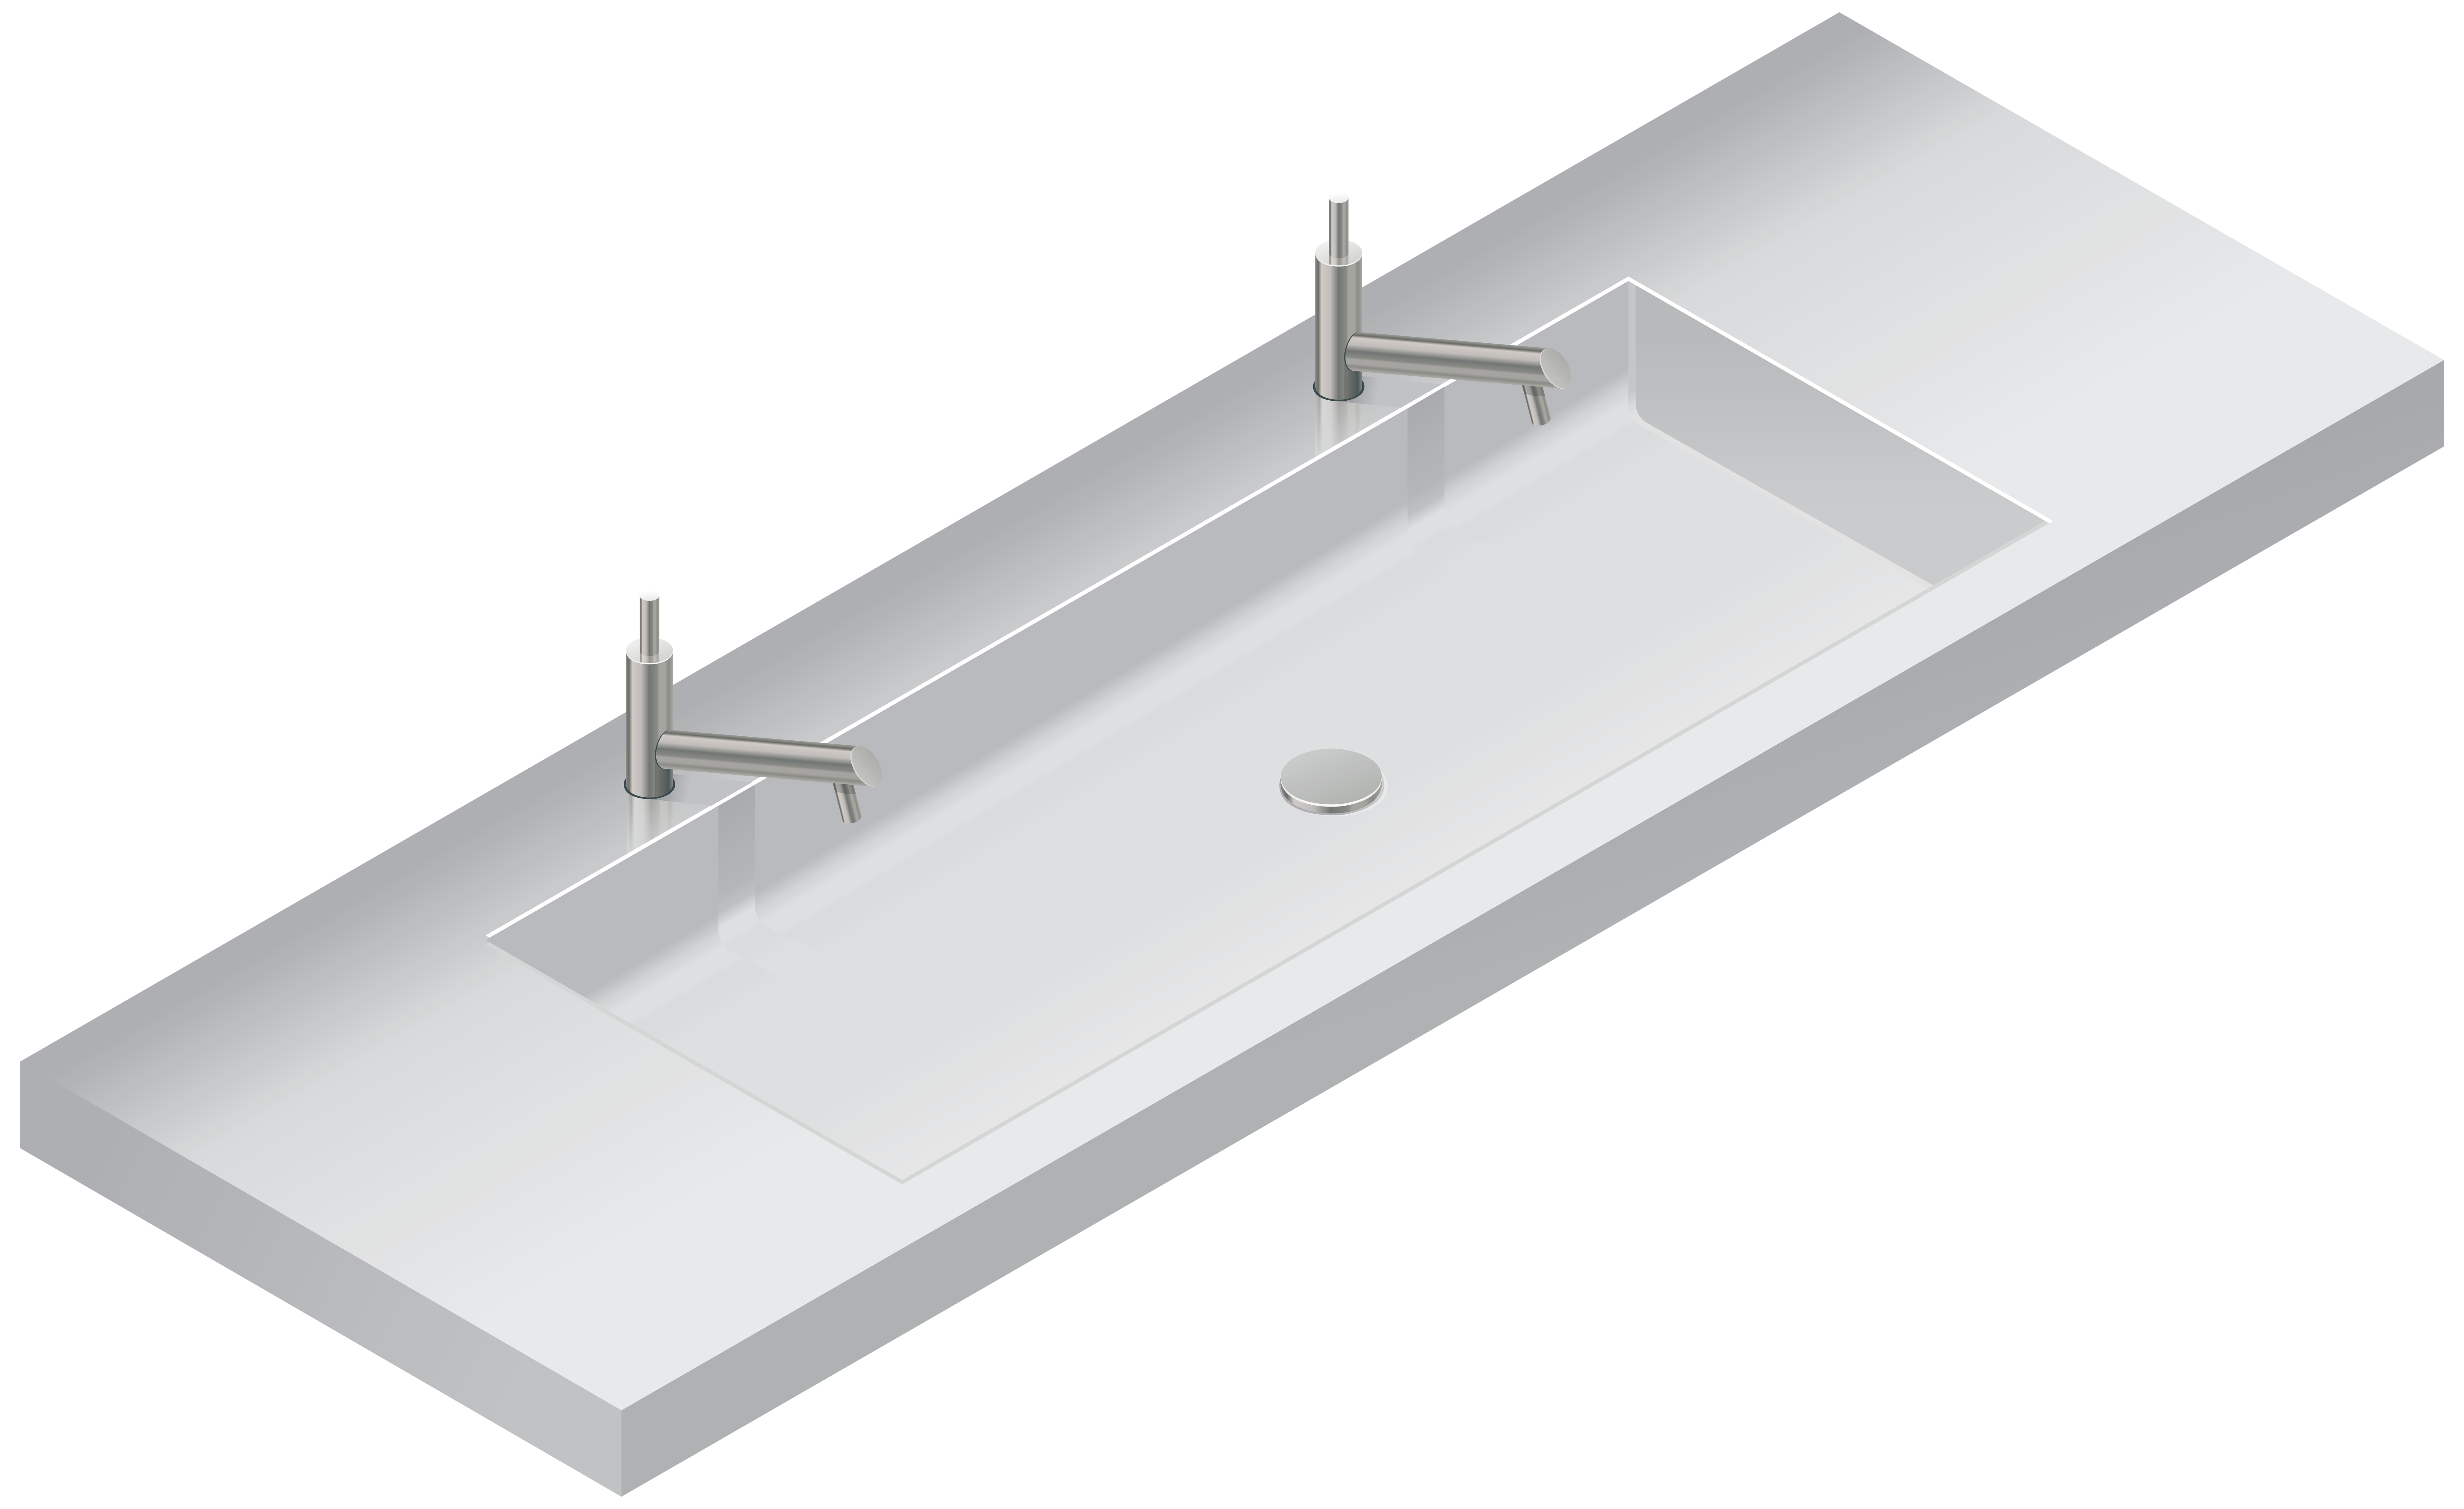 tub clipart basin